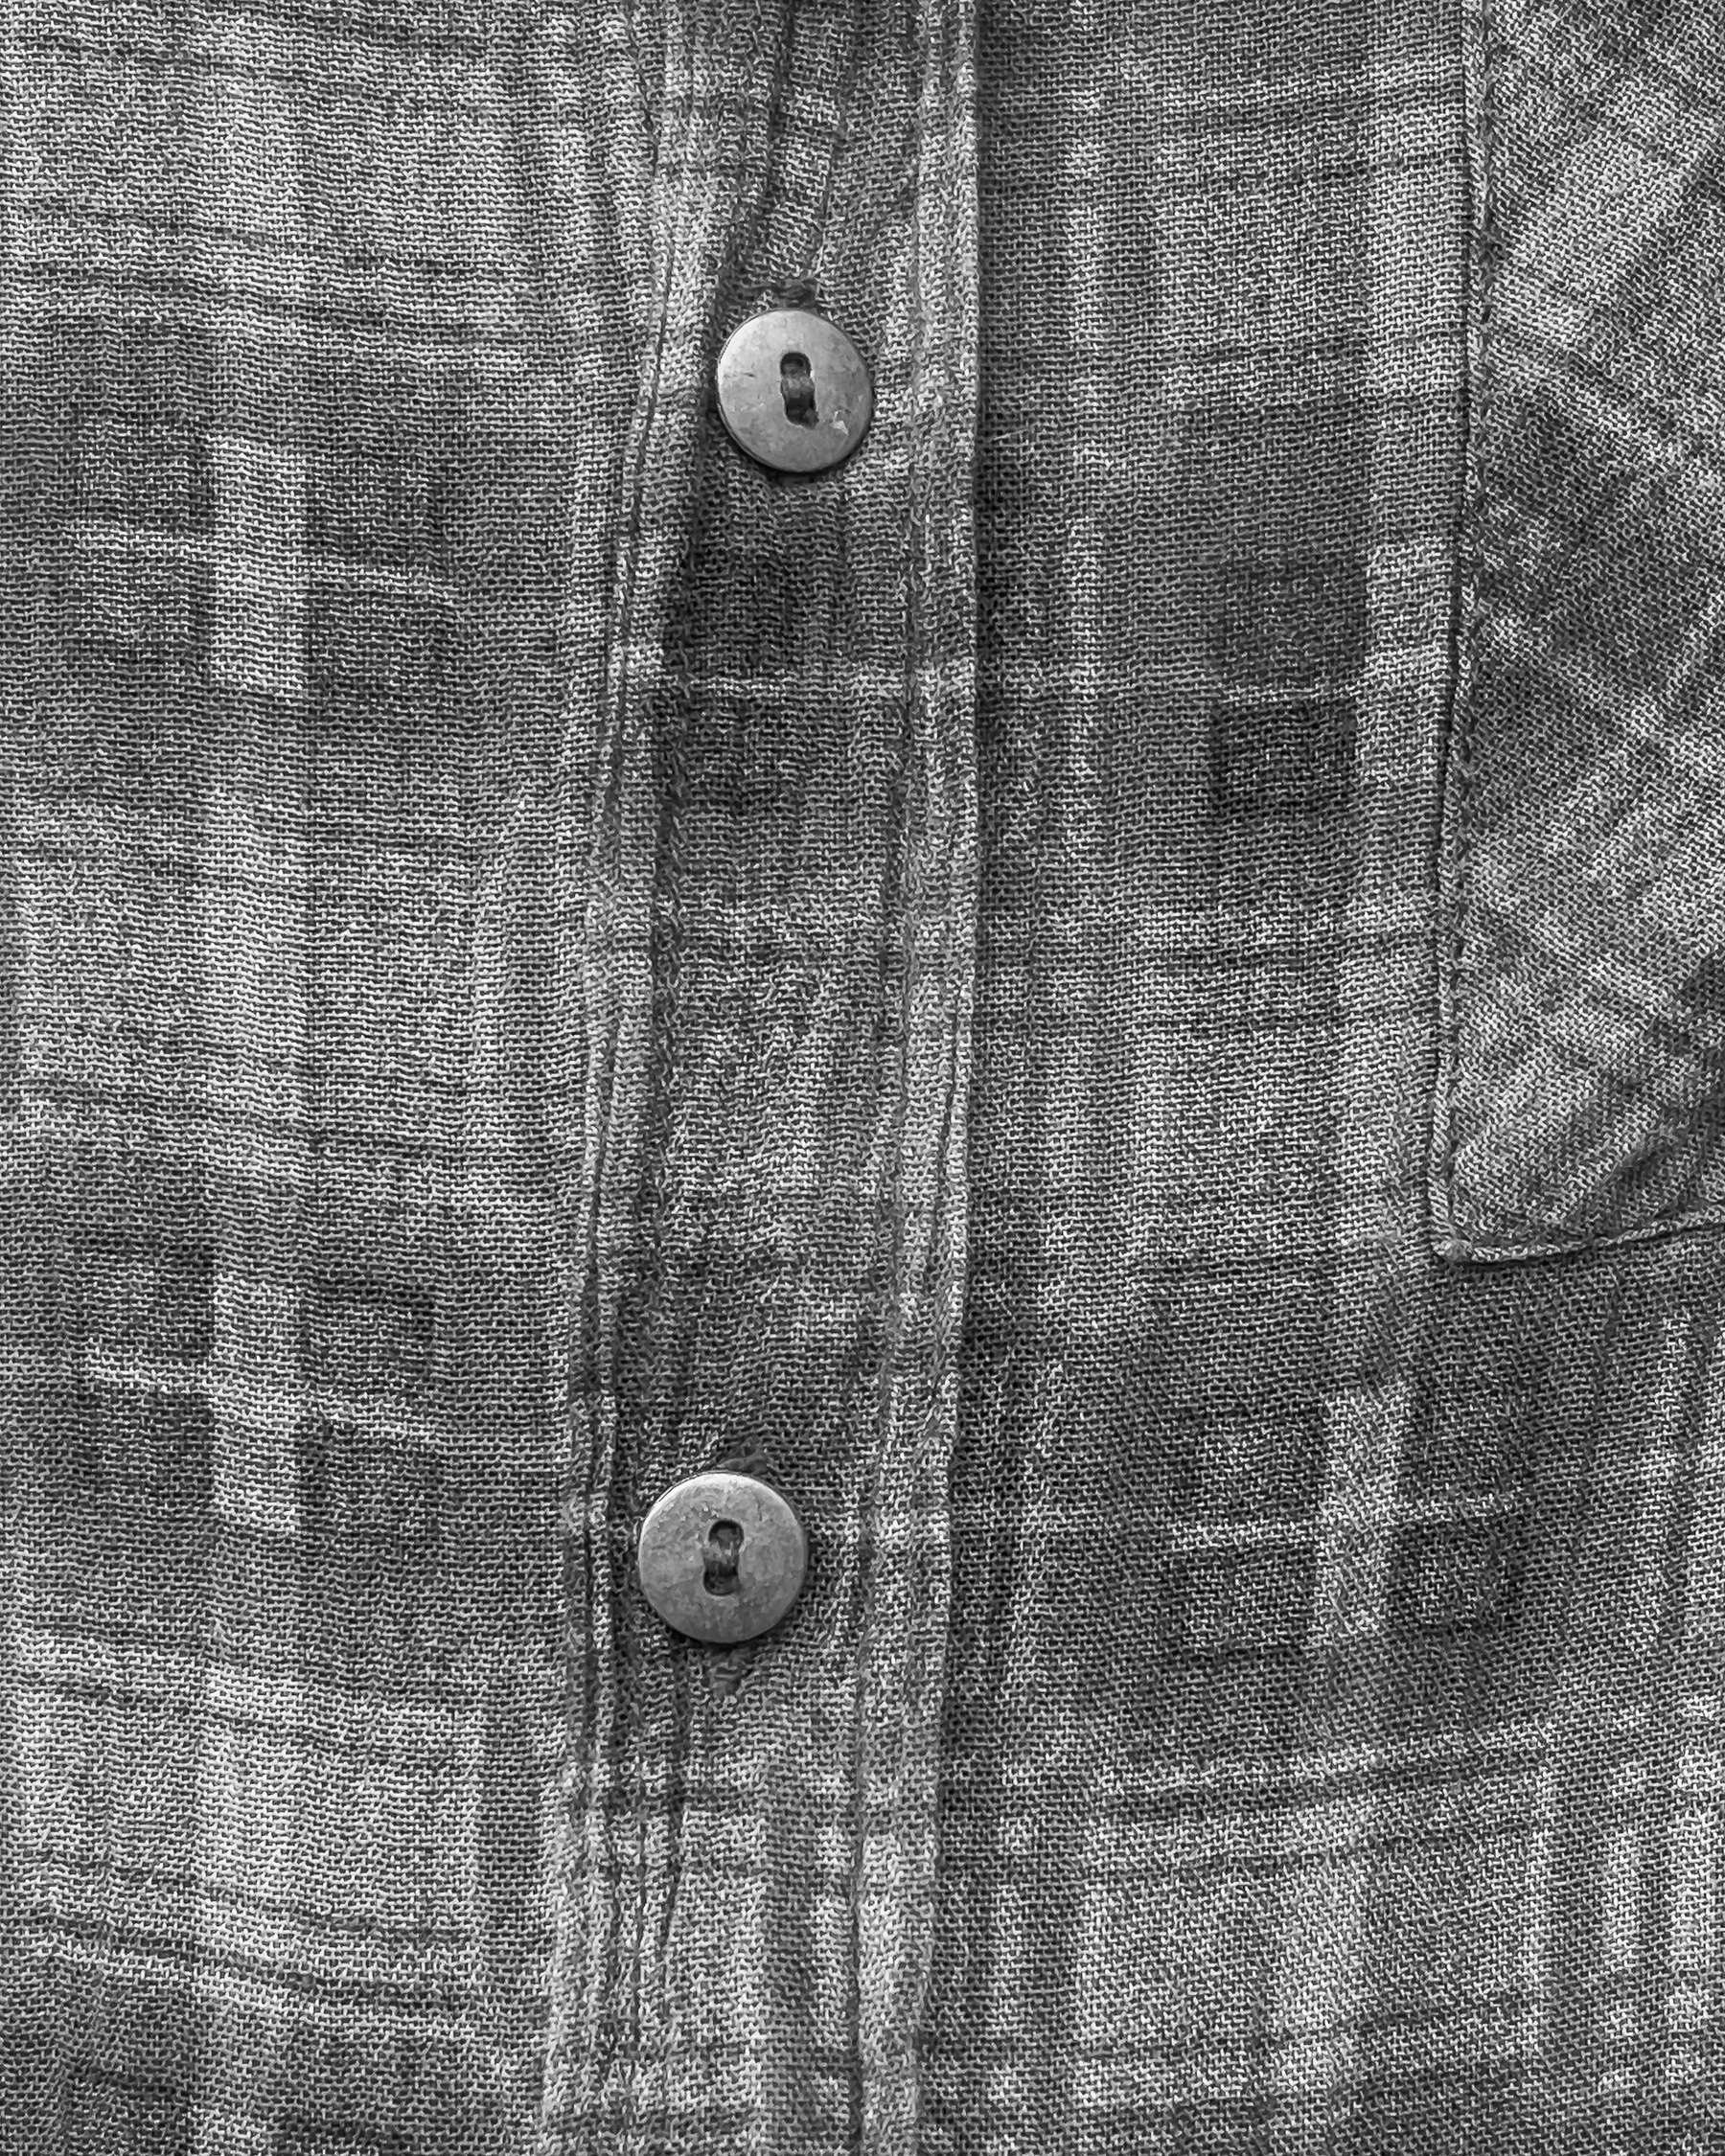 Plaid shirt detail.